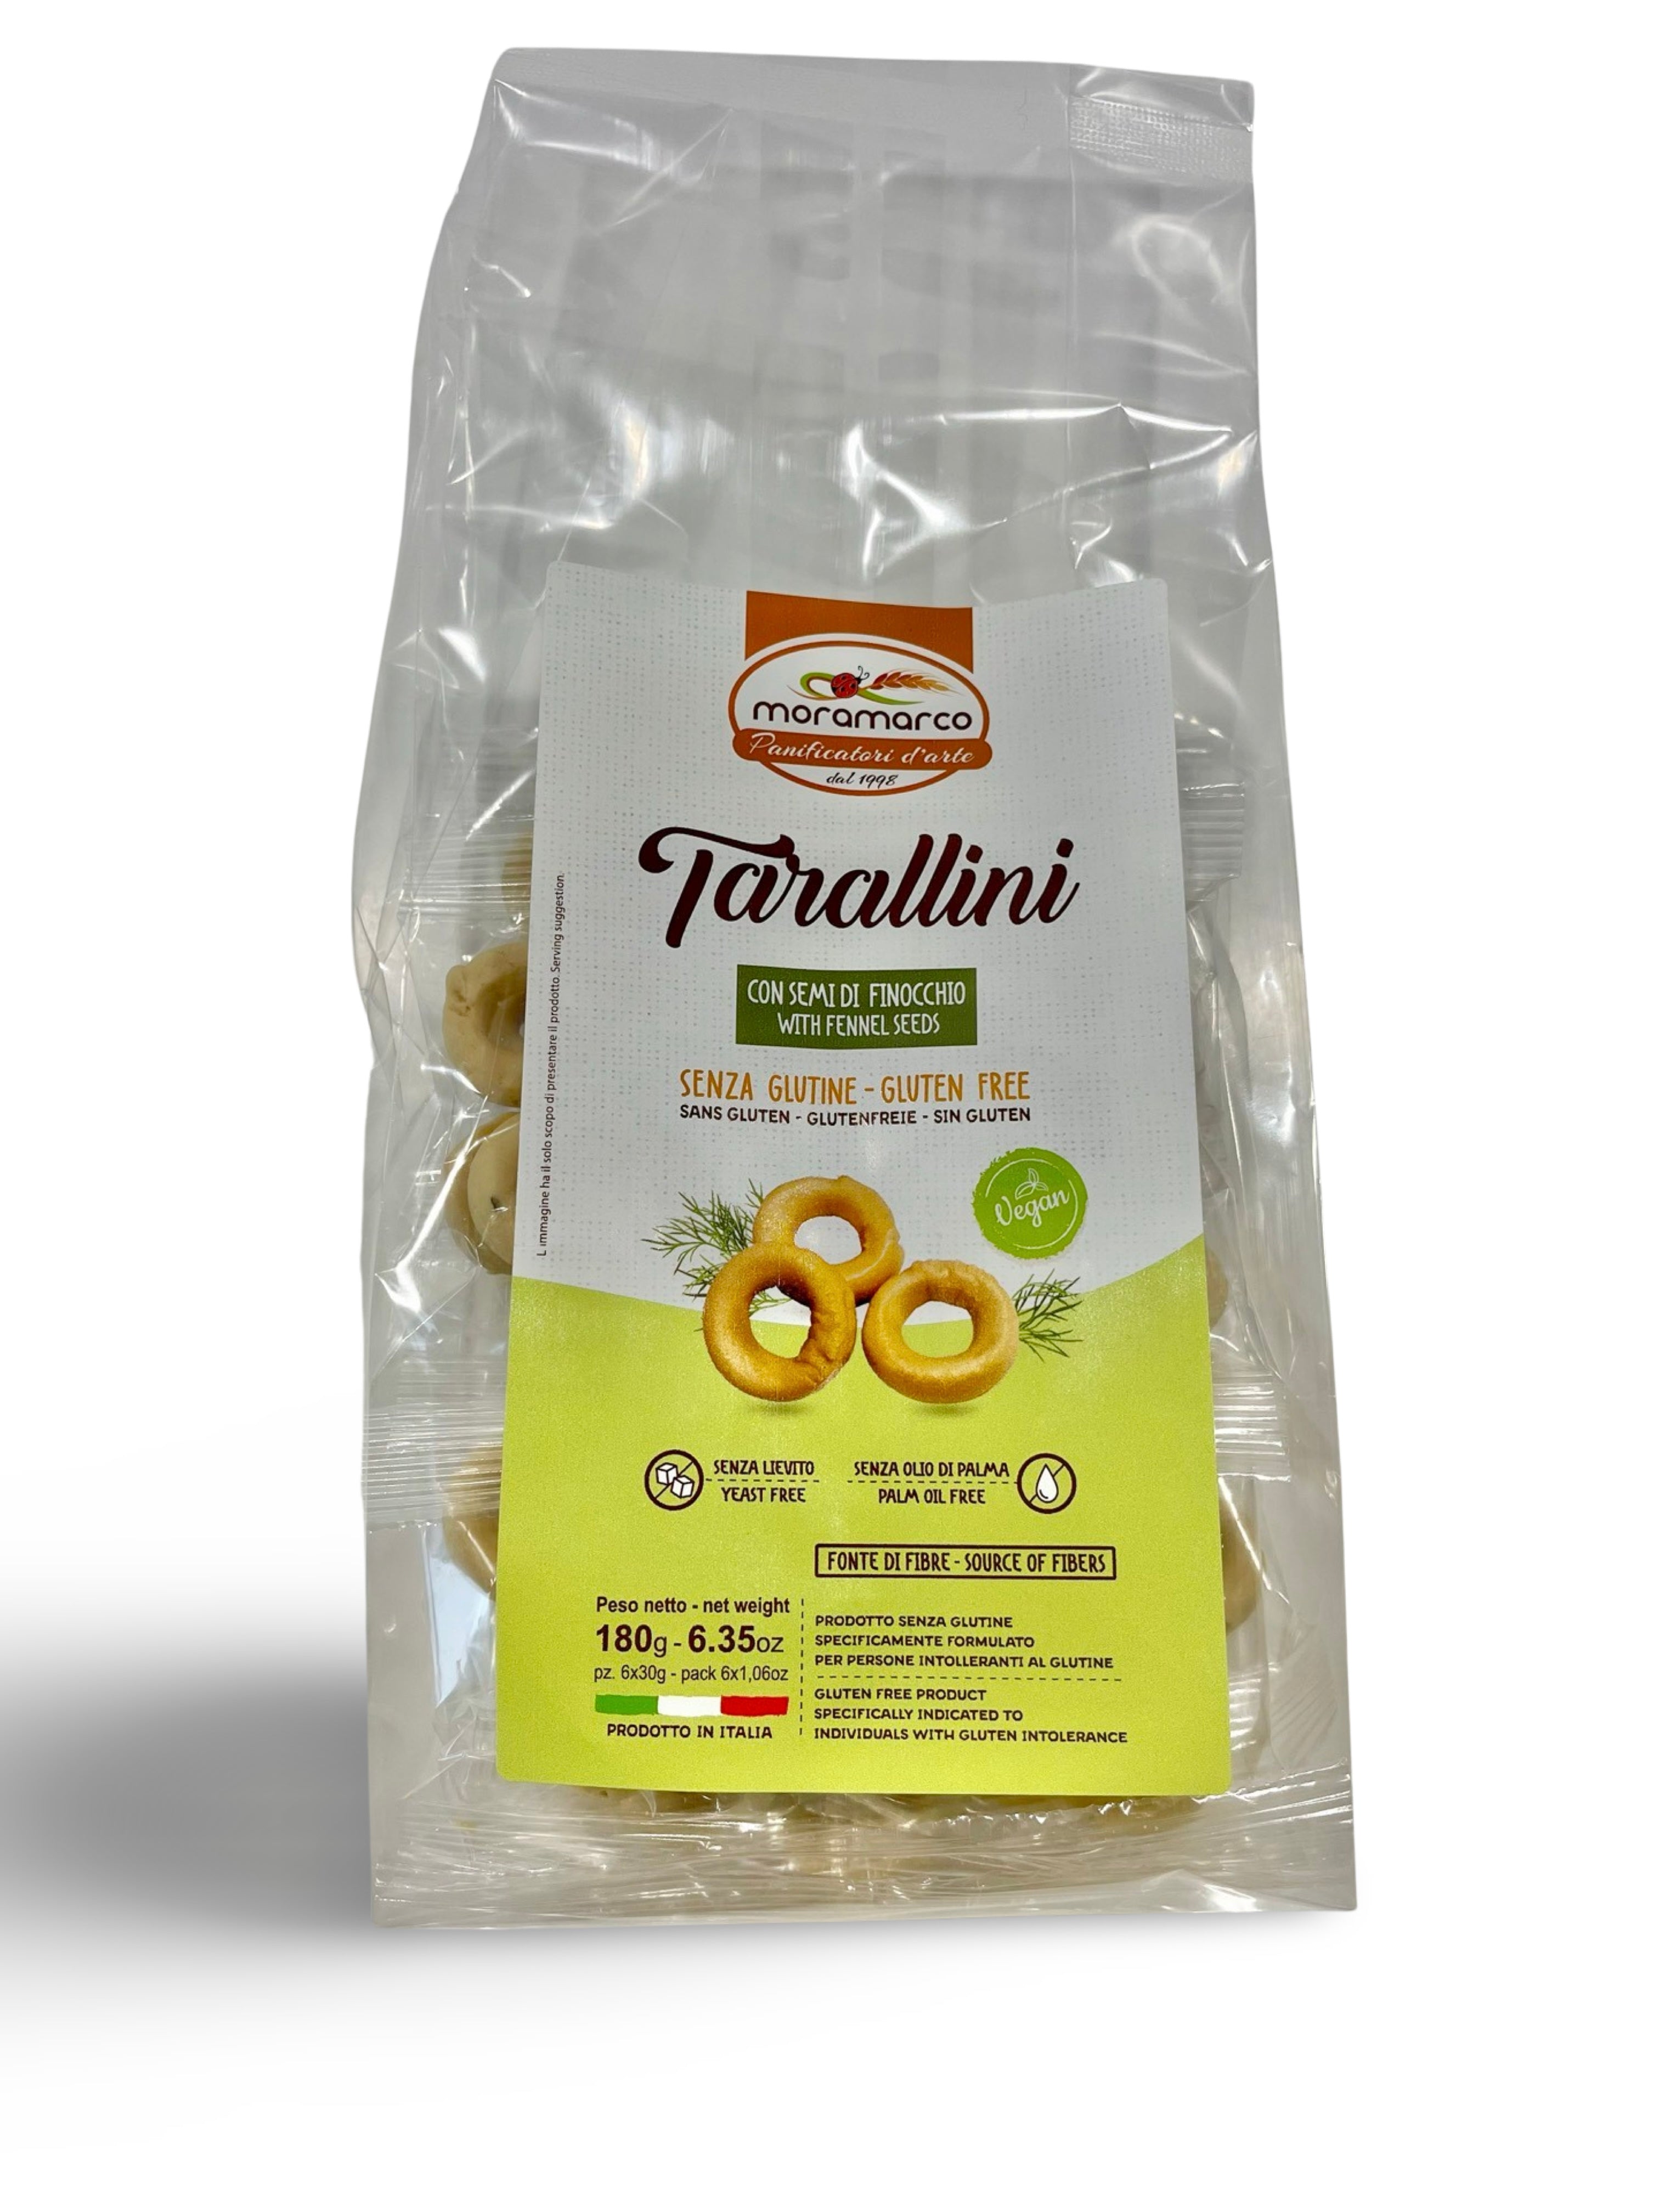 Tarallini with fennel gluten-free